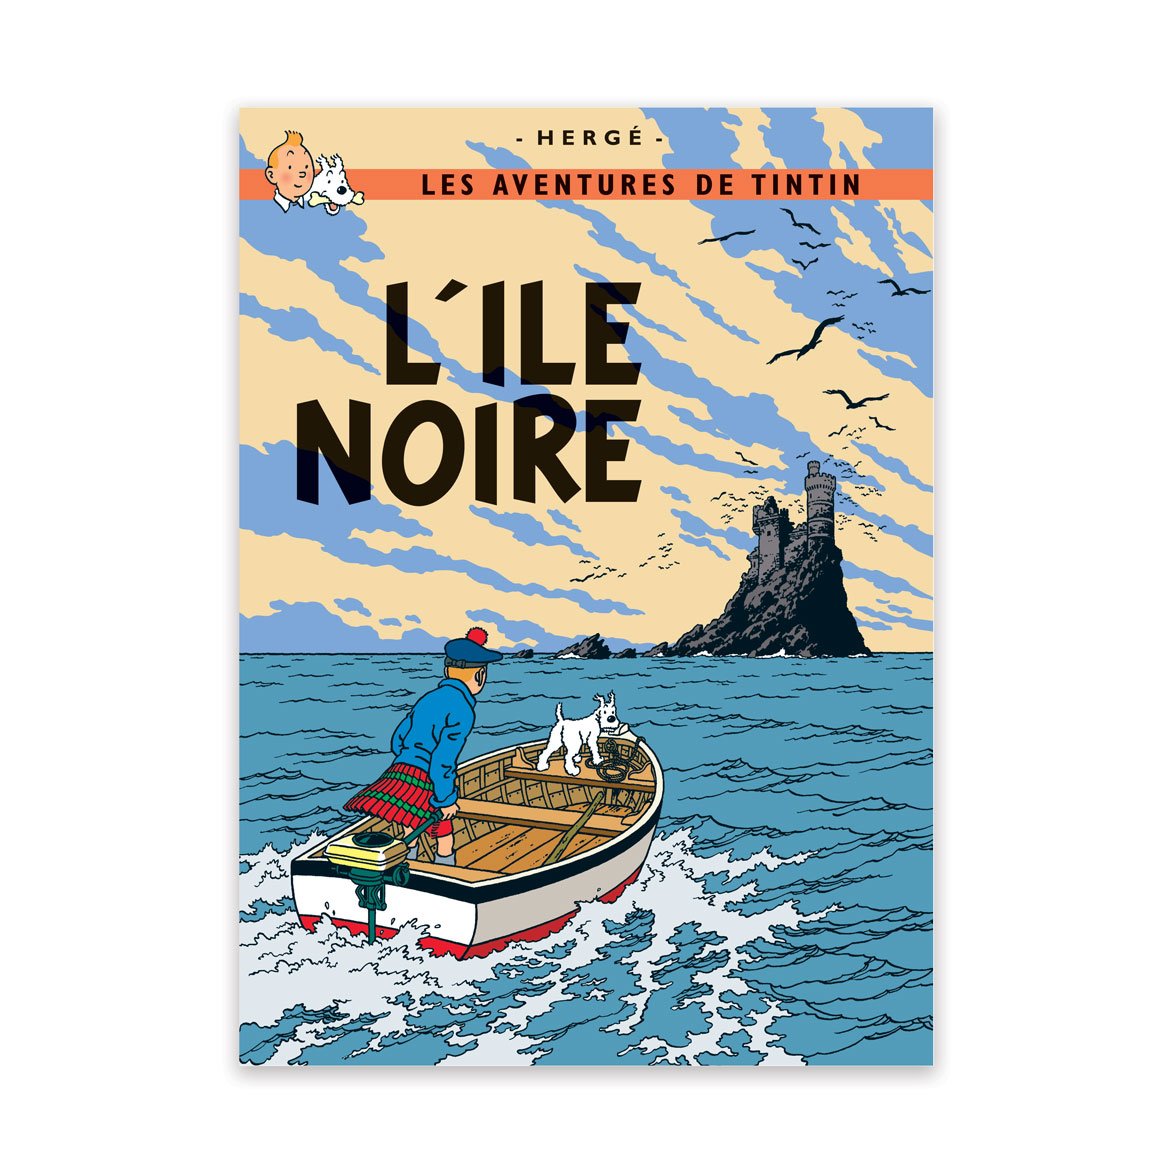 Tintin book postcards Island